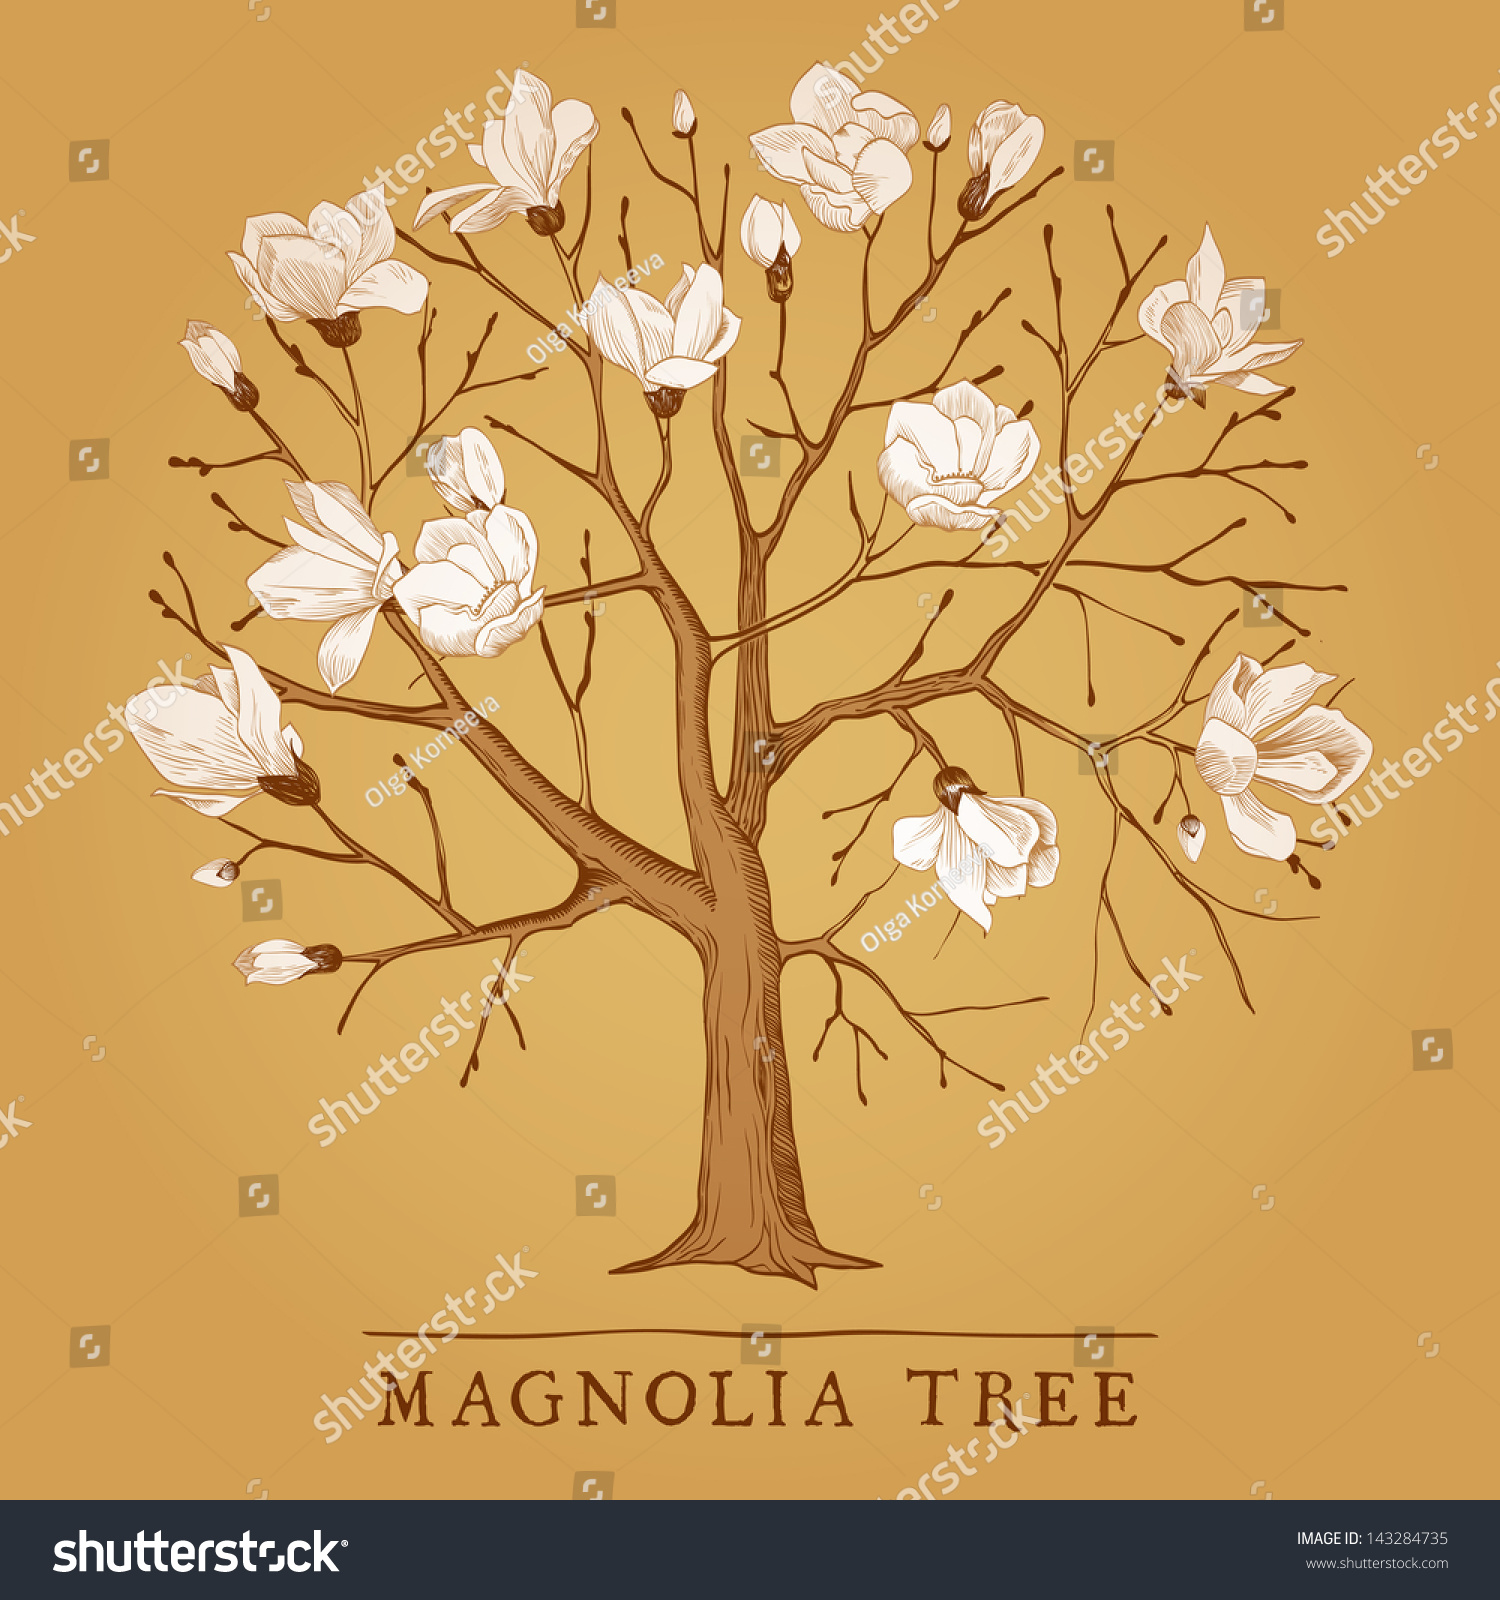 clipart of magnolia tree - photo #39